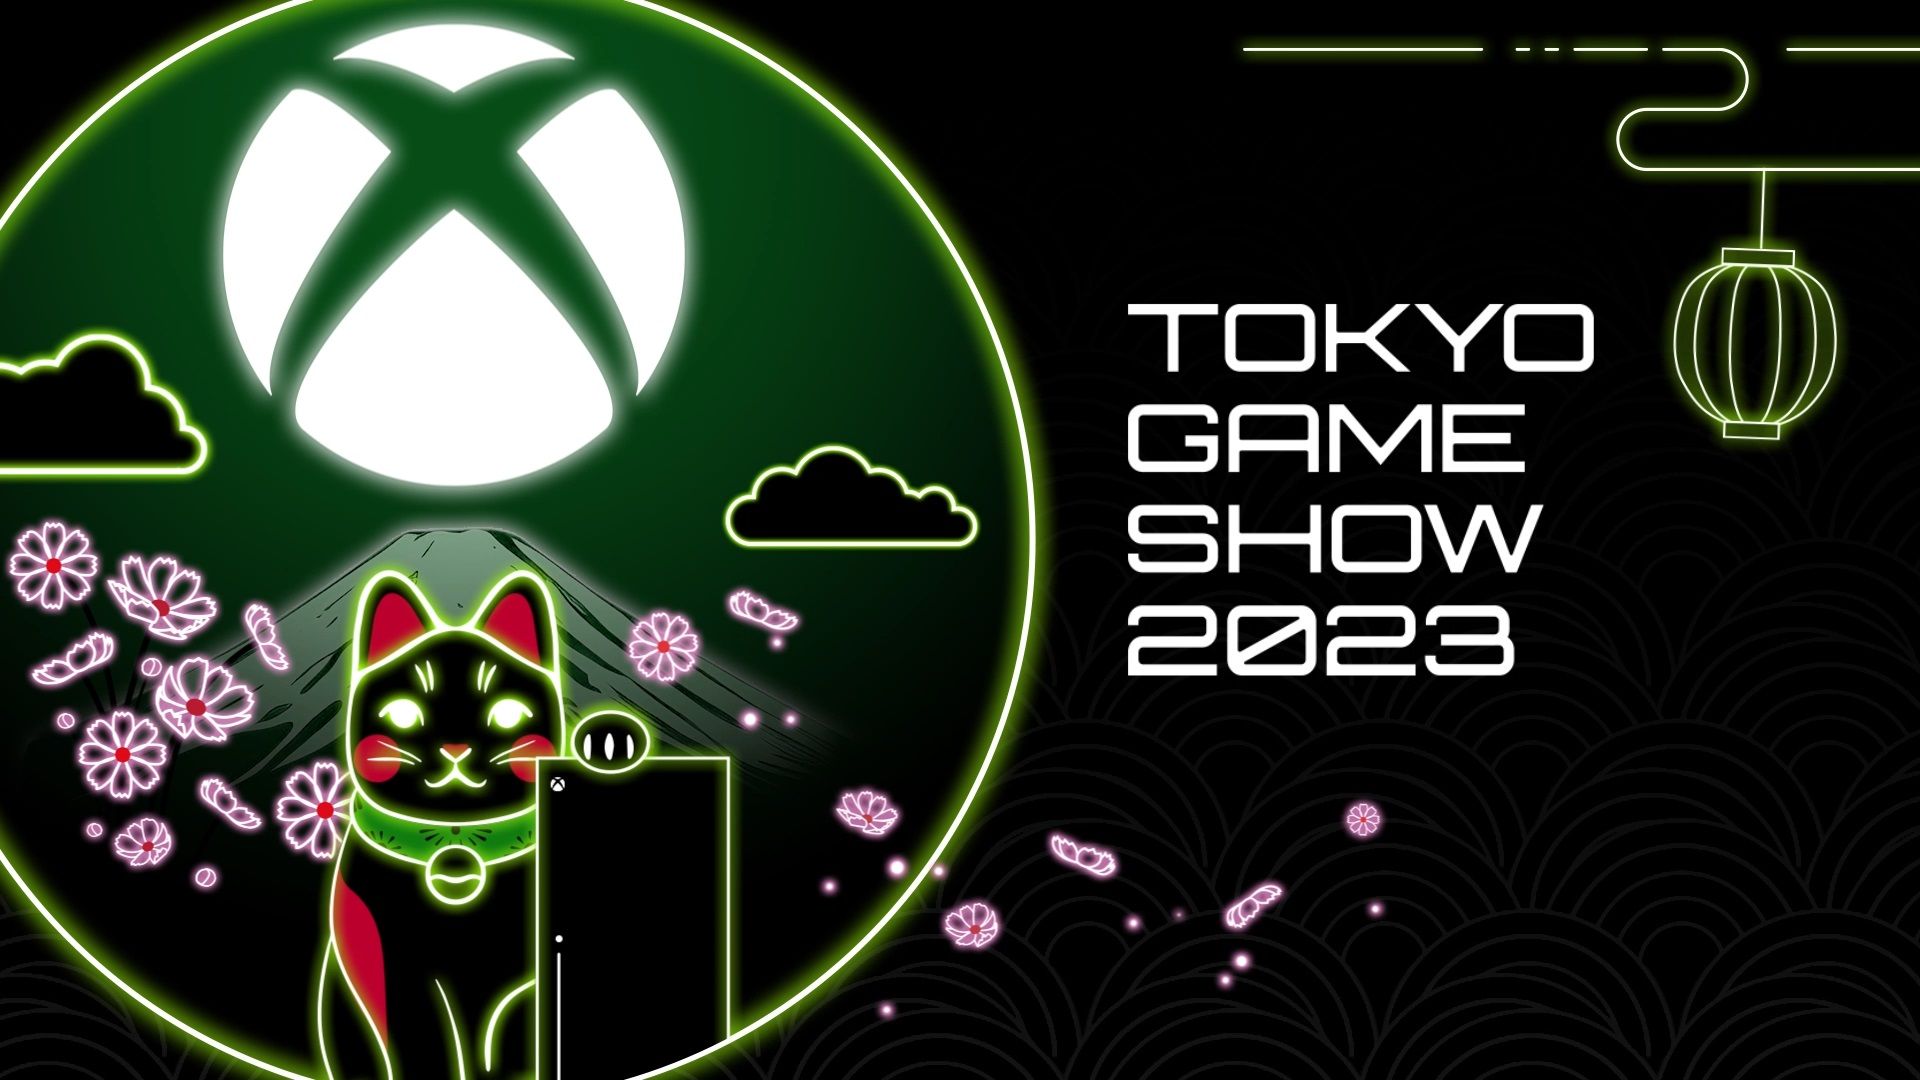 Microsoft annuncia lo Streaming al Tokyo Games Show